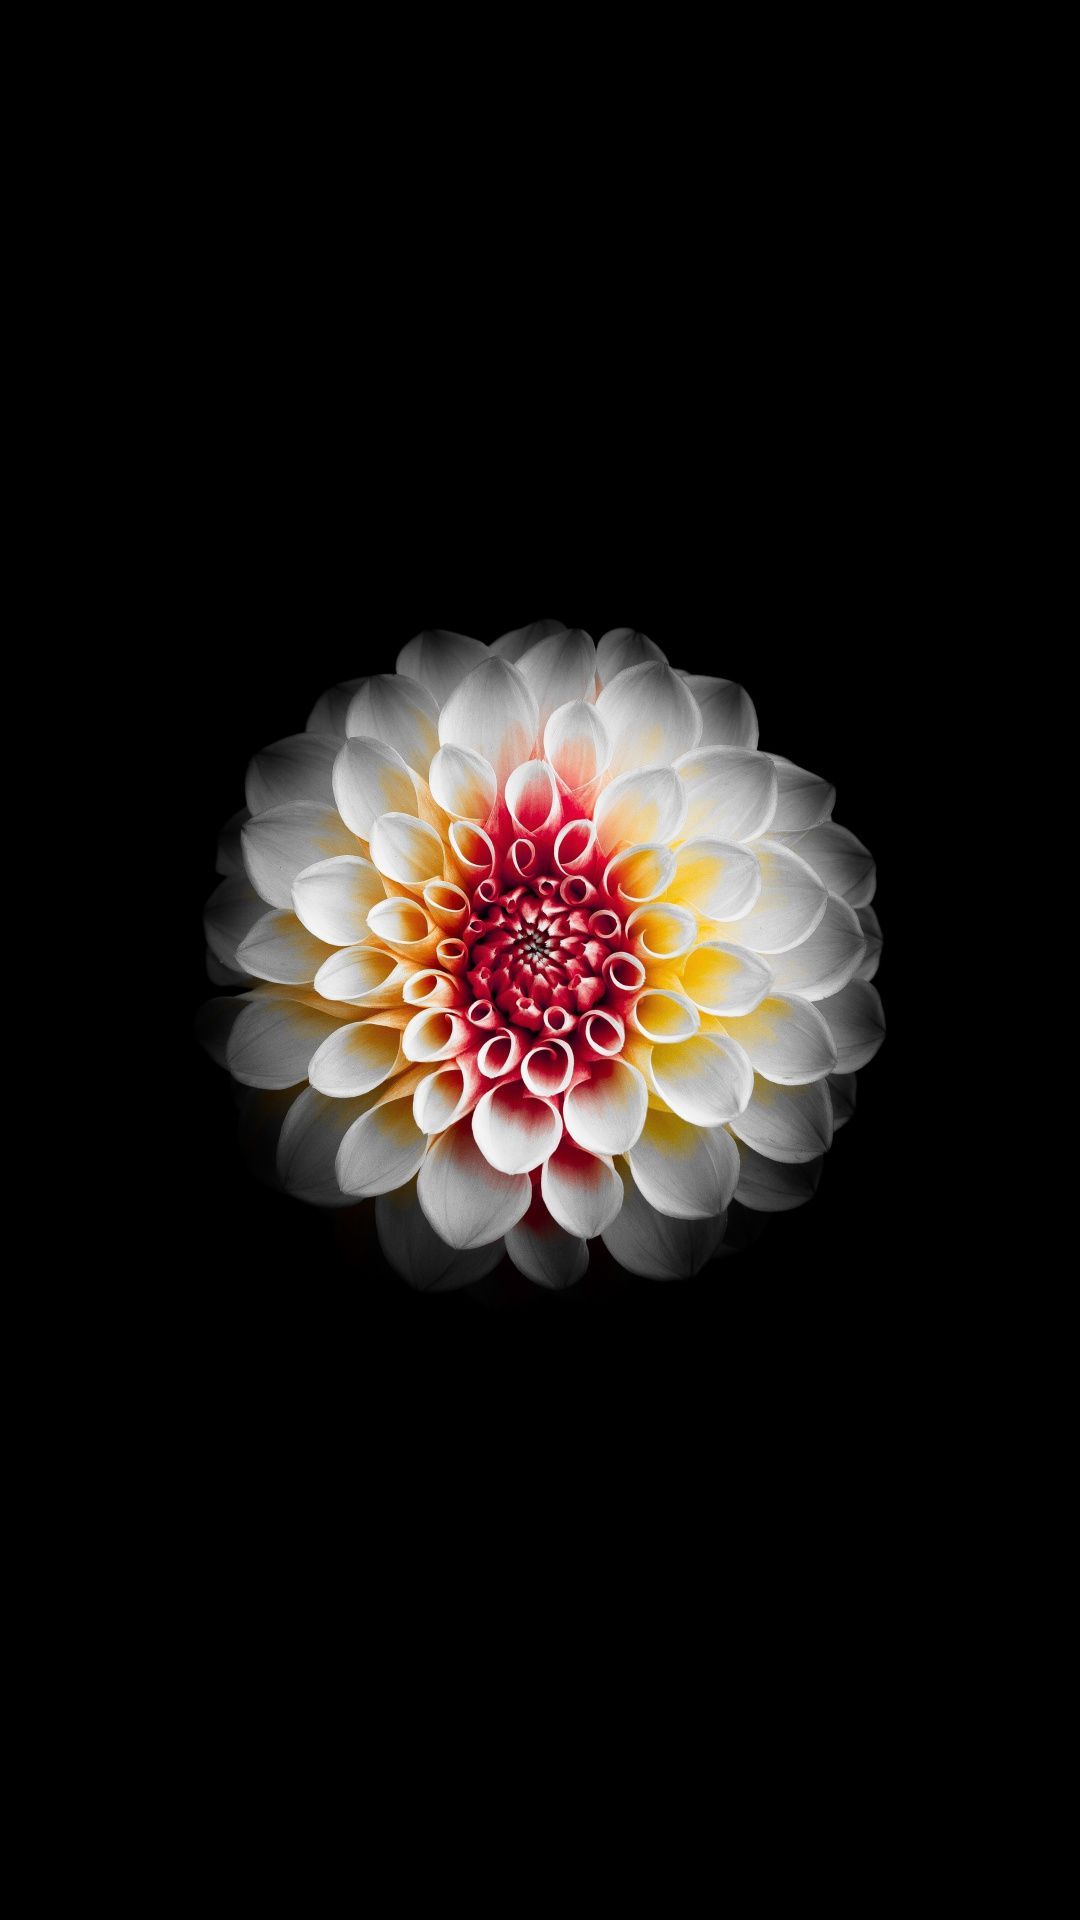 Dahila, flower, white and dark, 1080x1920 wallpaper. Flower iphone wallpaper, Flower phone wallpaper, Colourful wallpaper iphone